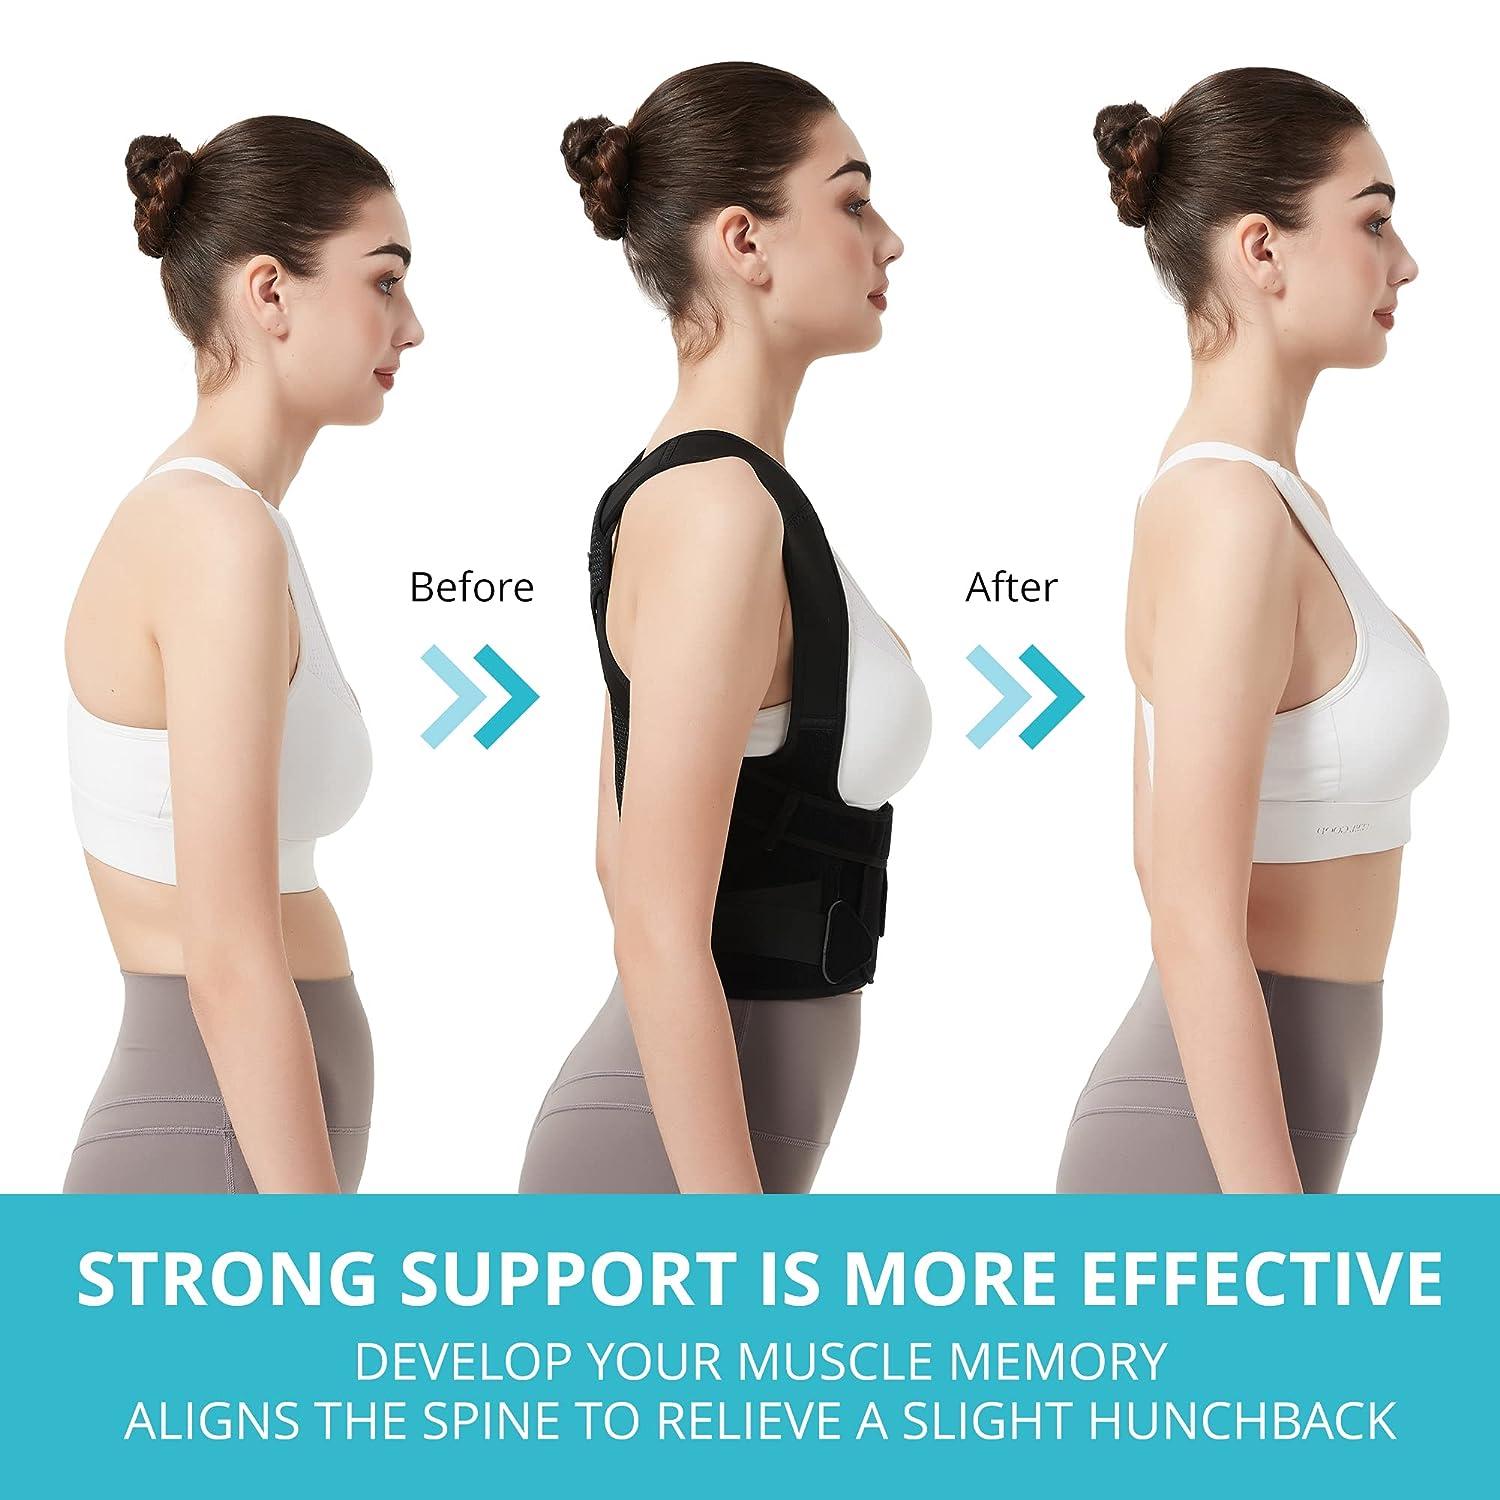 Back Brace And Posture Corrector For Women And Men, Adjustable